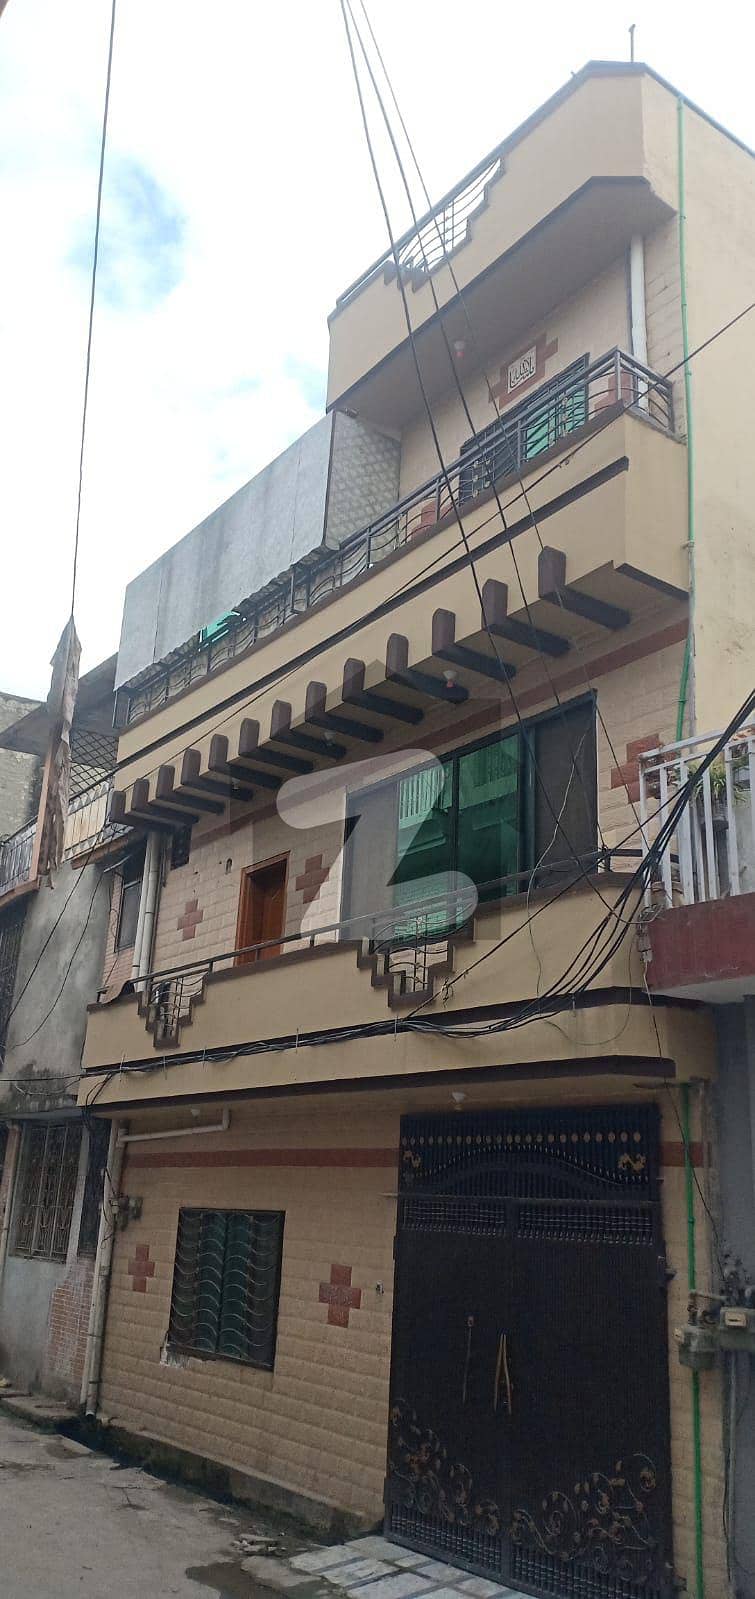 House for sale in rawalpindi double story muslim masjid street 5 marla